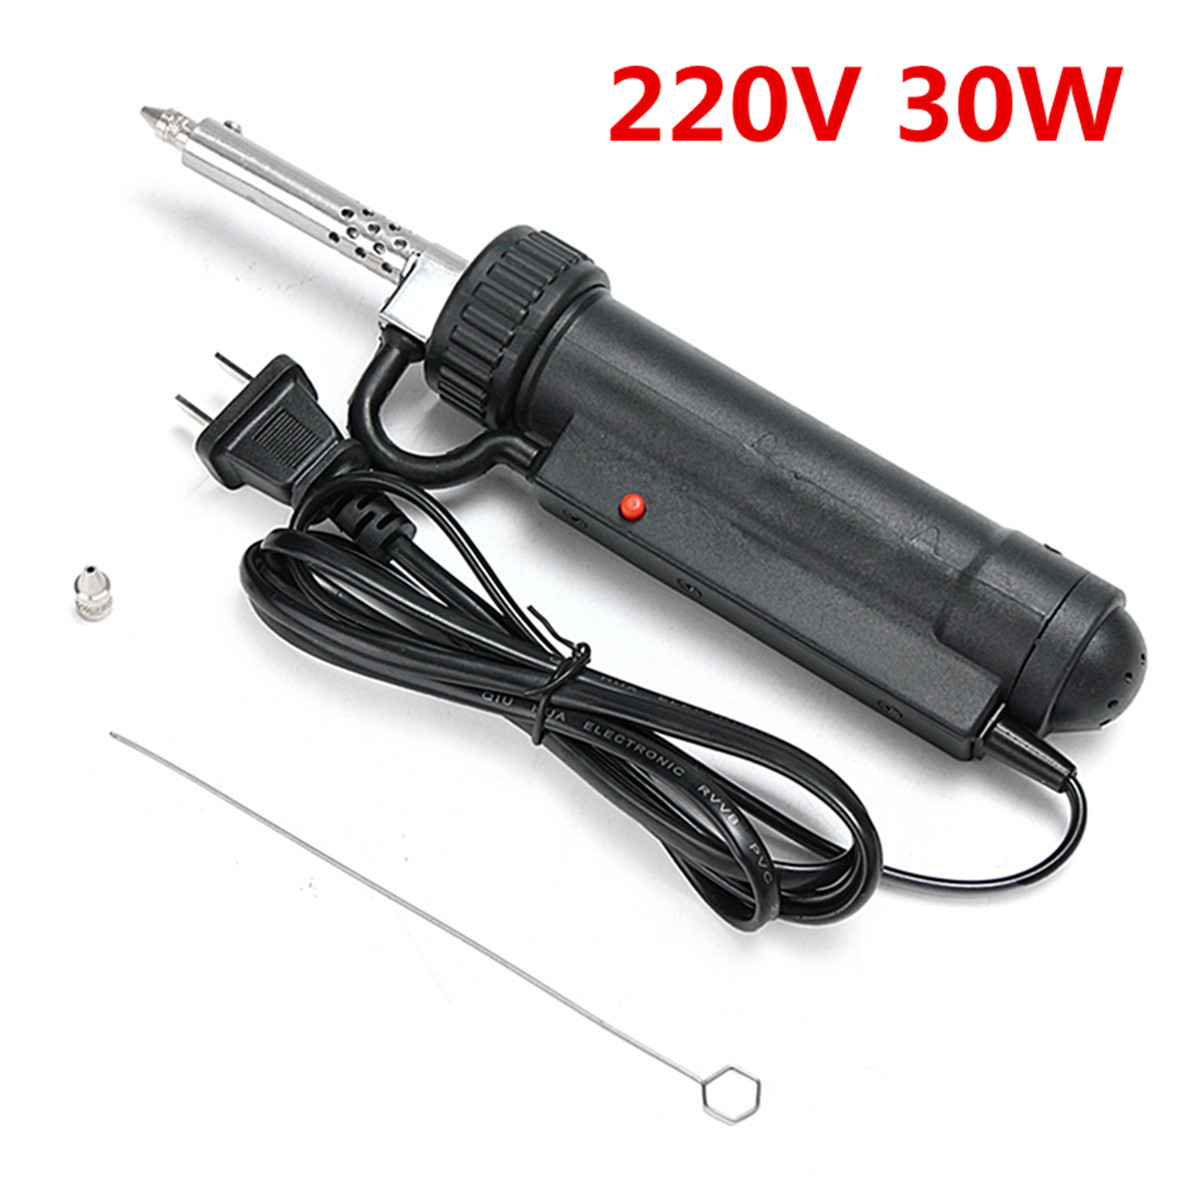 220V 30W Electric Vacuum Solder Sucker with Power Cord /Desoldering Pump /Tool Repair Black Welding Soldering Supplies